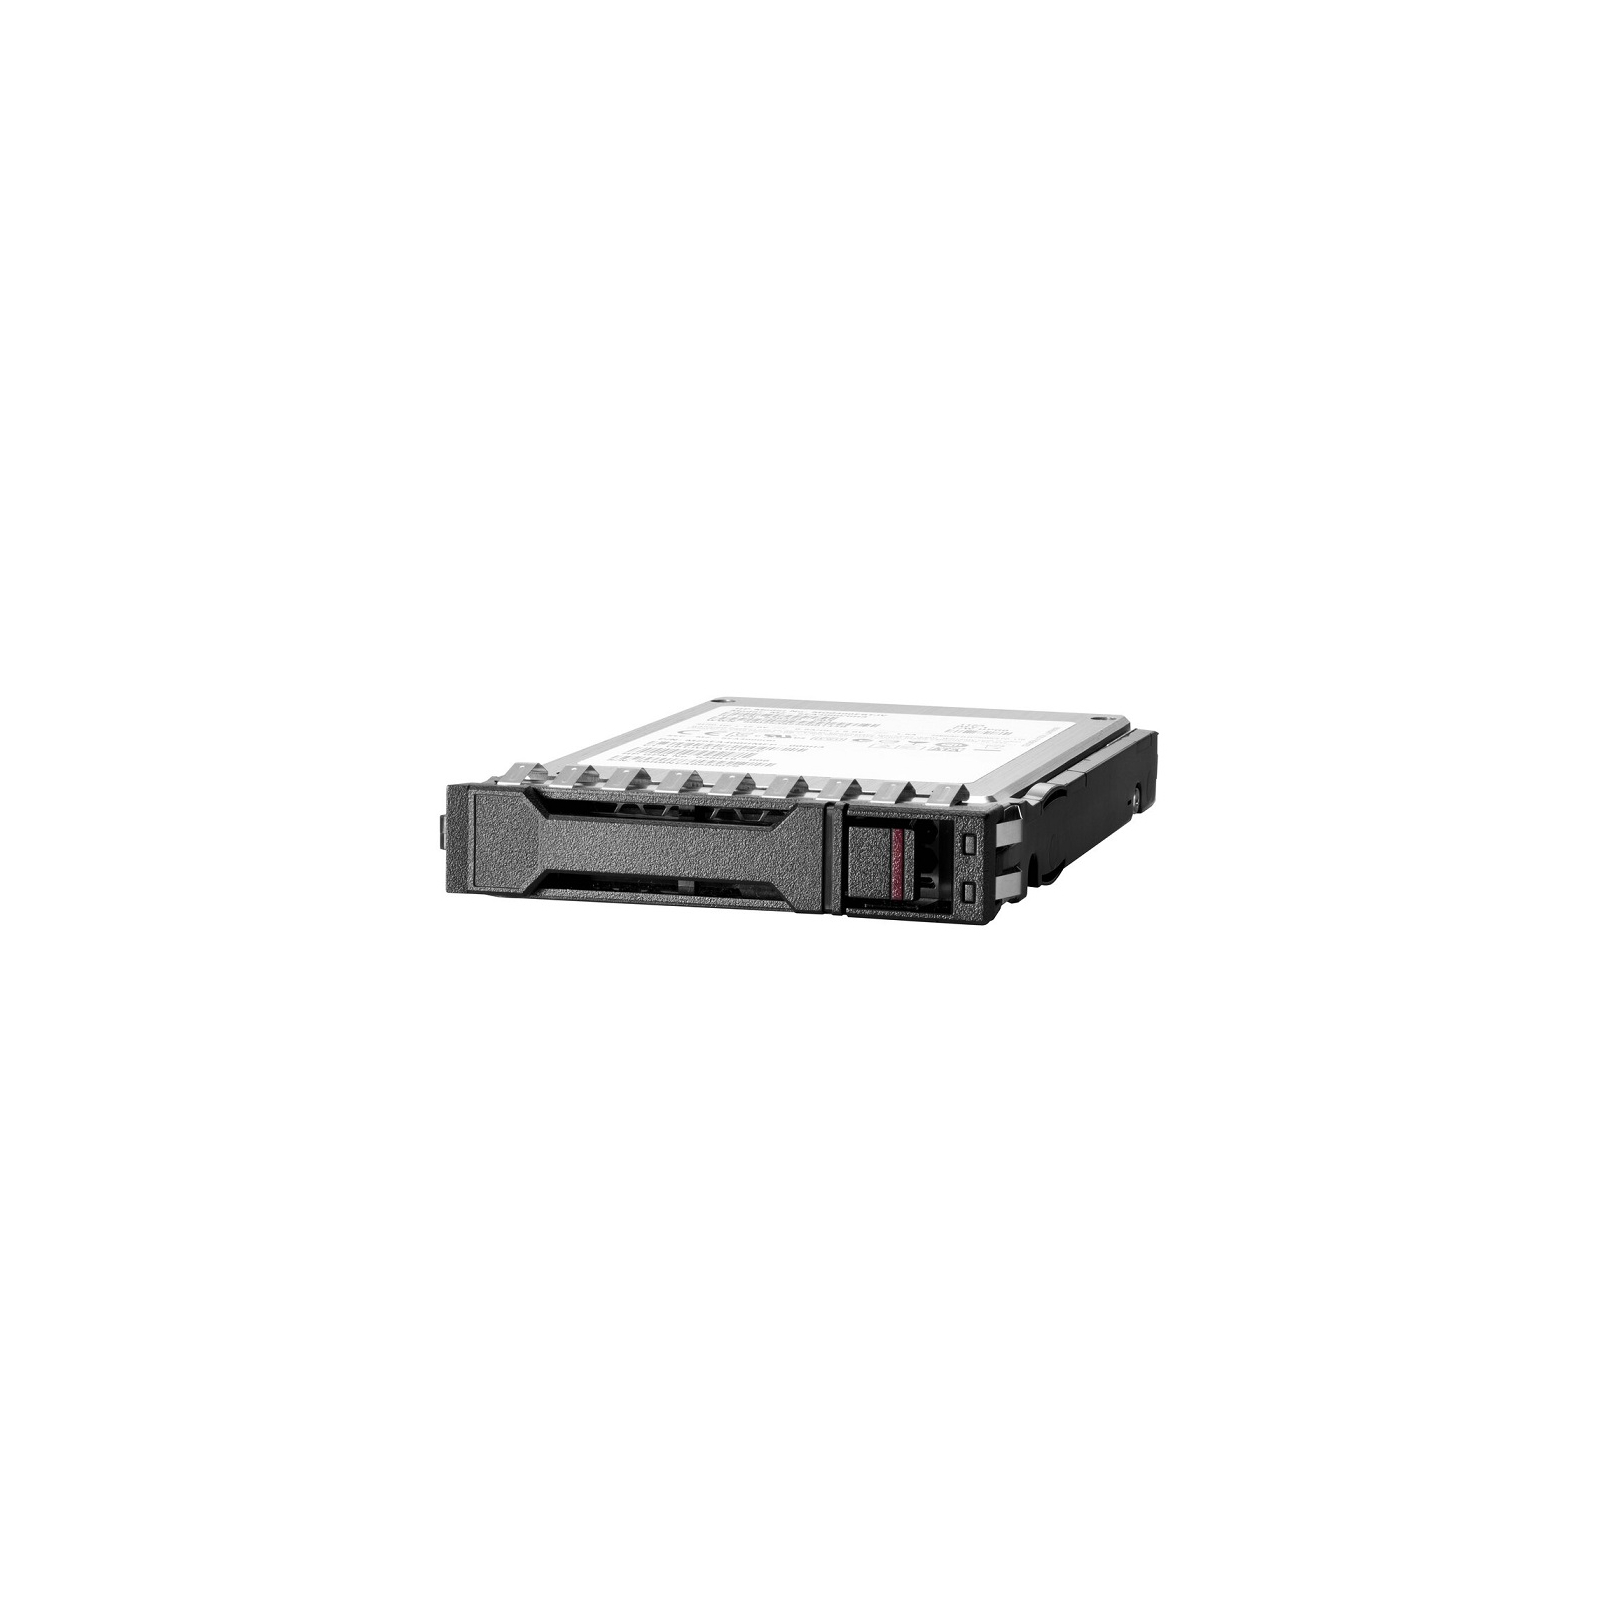 Жесткий диск для сервера HPE 300GB SAS 10K 2.5in 12G BC HDD (P40430-B21)